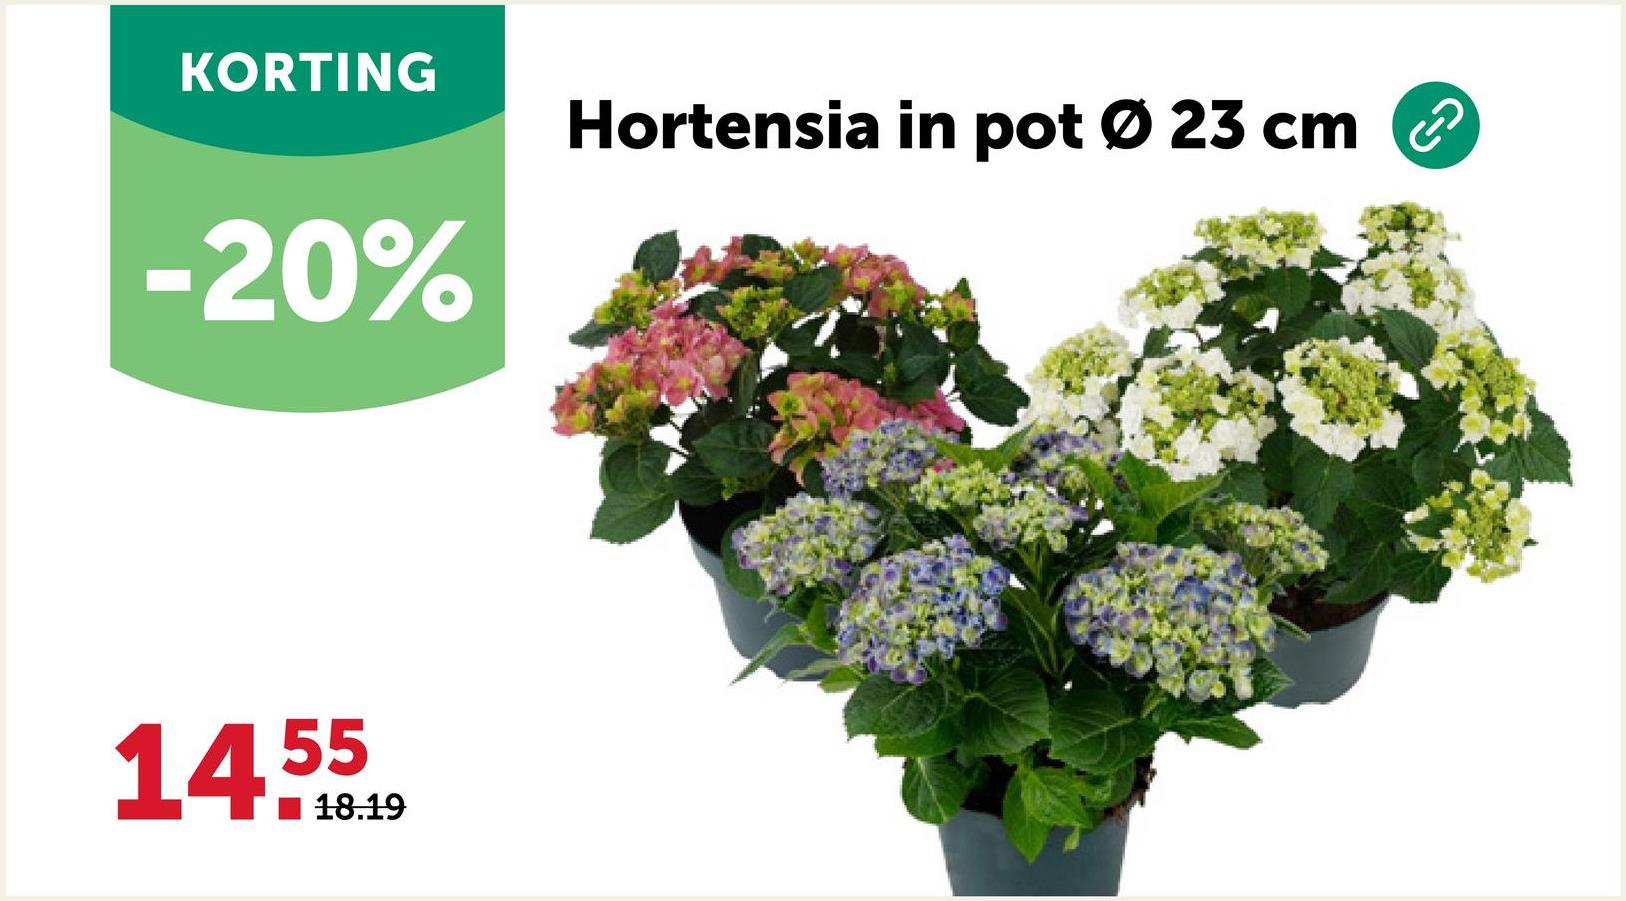 KORTING
-20%
55
14.10.19
18.19
Hortensia in pot Ø 23 cm